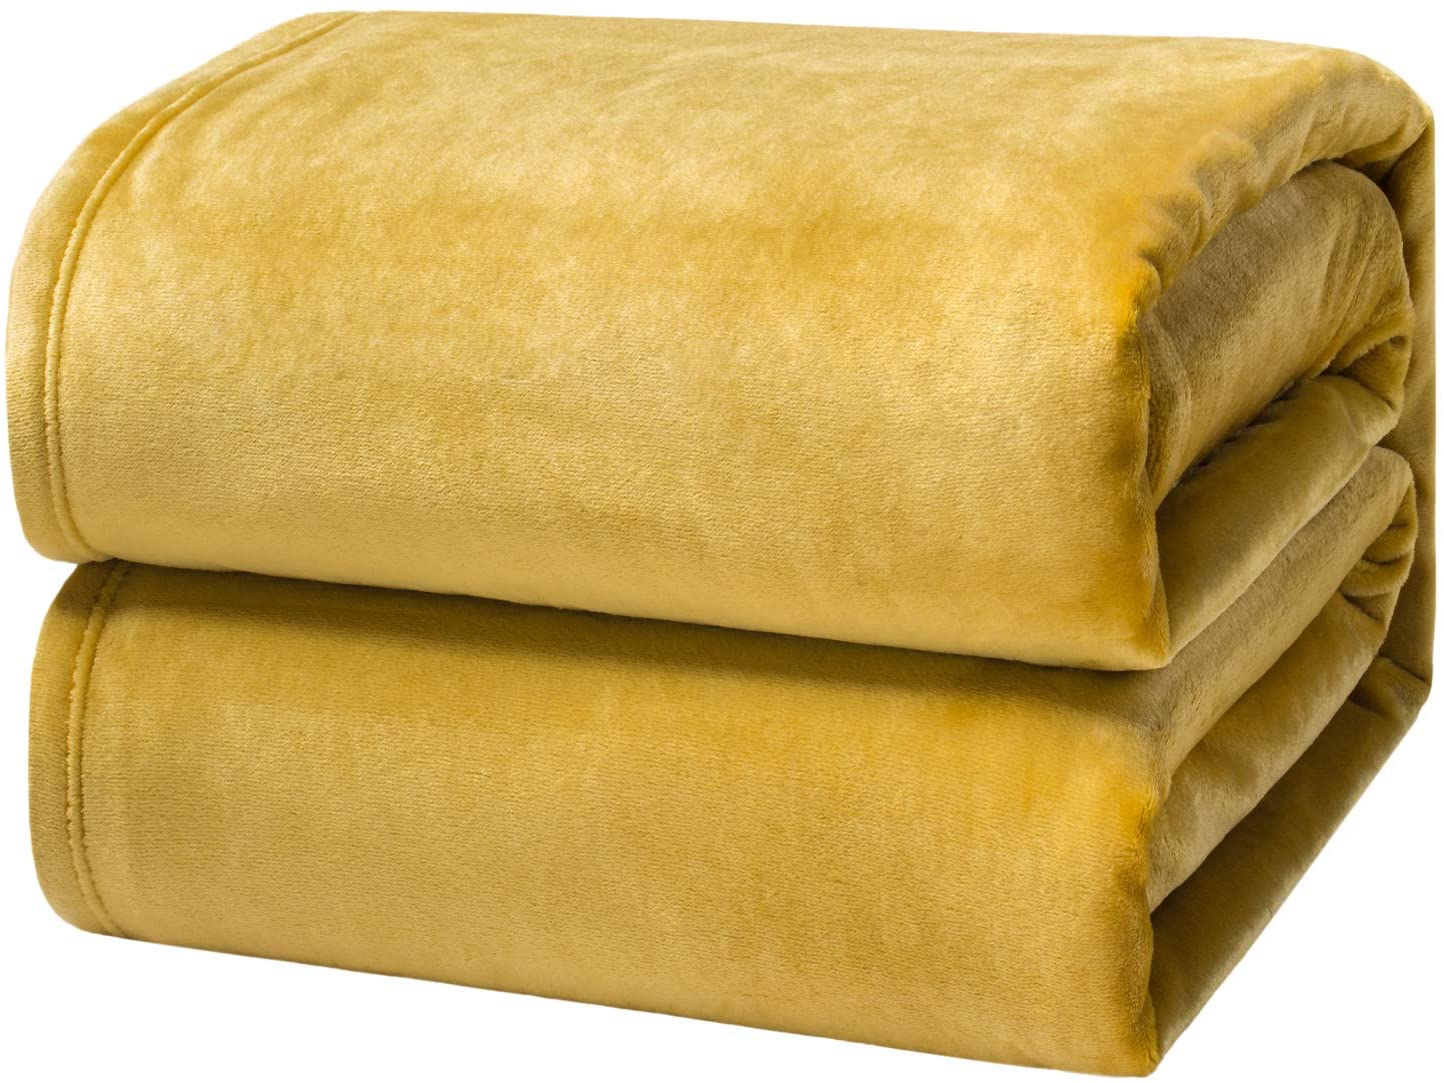 Bedsure Fleece Blanket King Size Gold Yellow Lightweight Super Soft Cozy Luxury